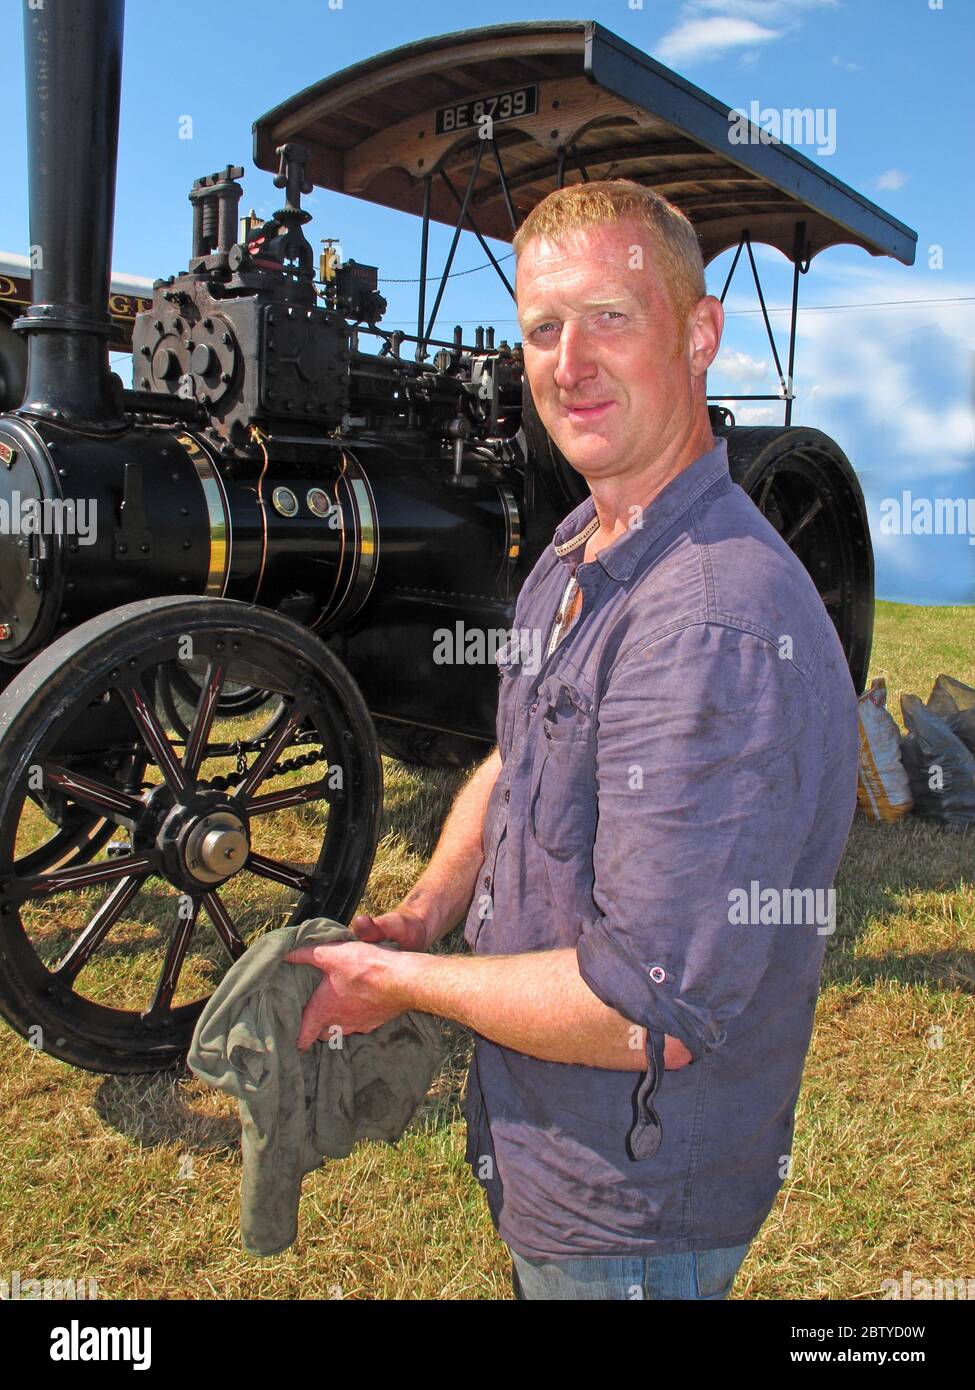 Steam Roller Driver, Engineer, with BE8739,Cheshire Steam Fair,Daresbury,Warrington,Cheshire,England,UK Stock Photo